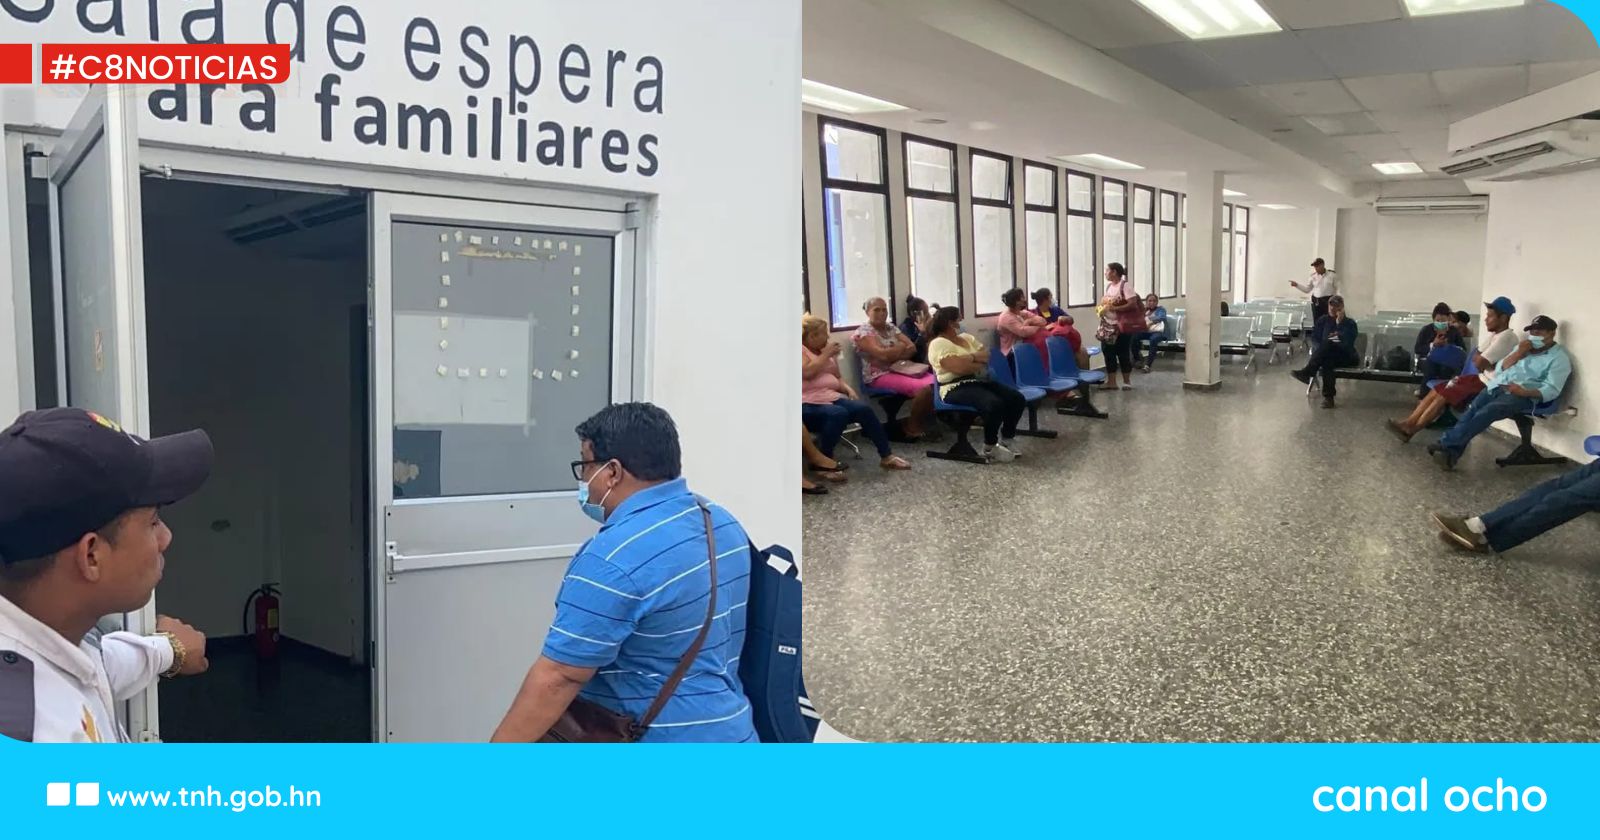 Hospital Escuela habilita sala de espera para familiares de pacientes